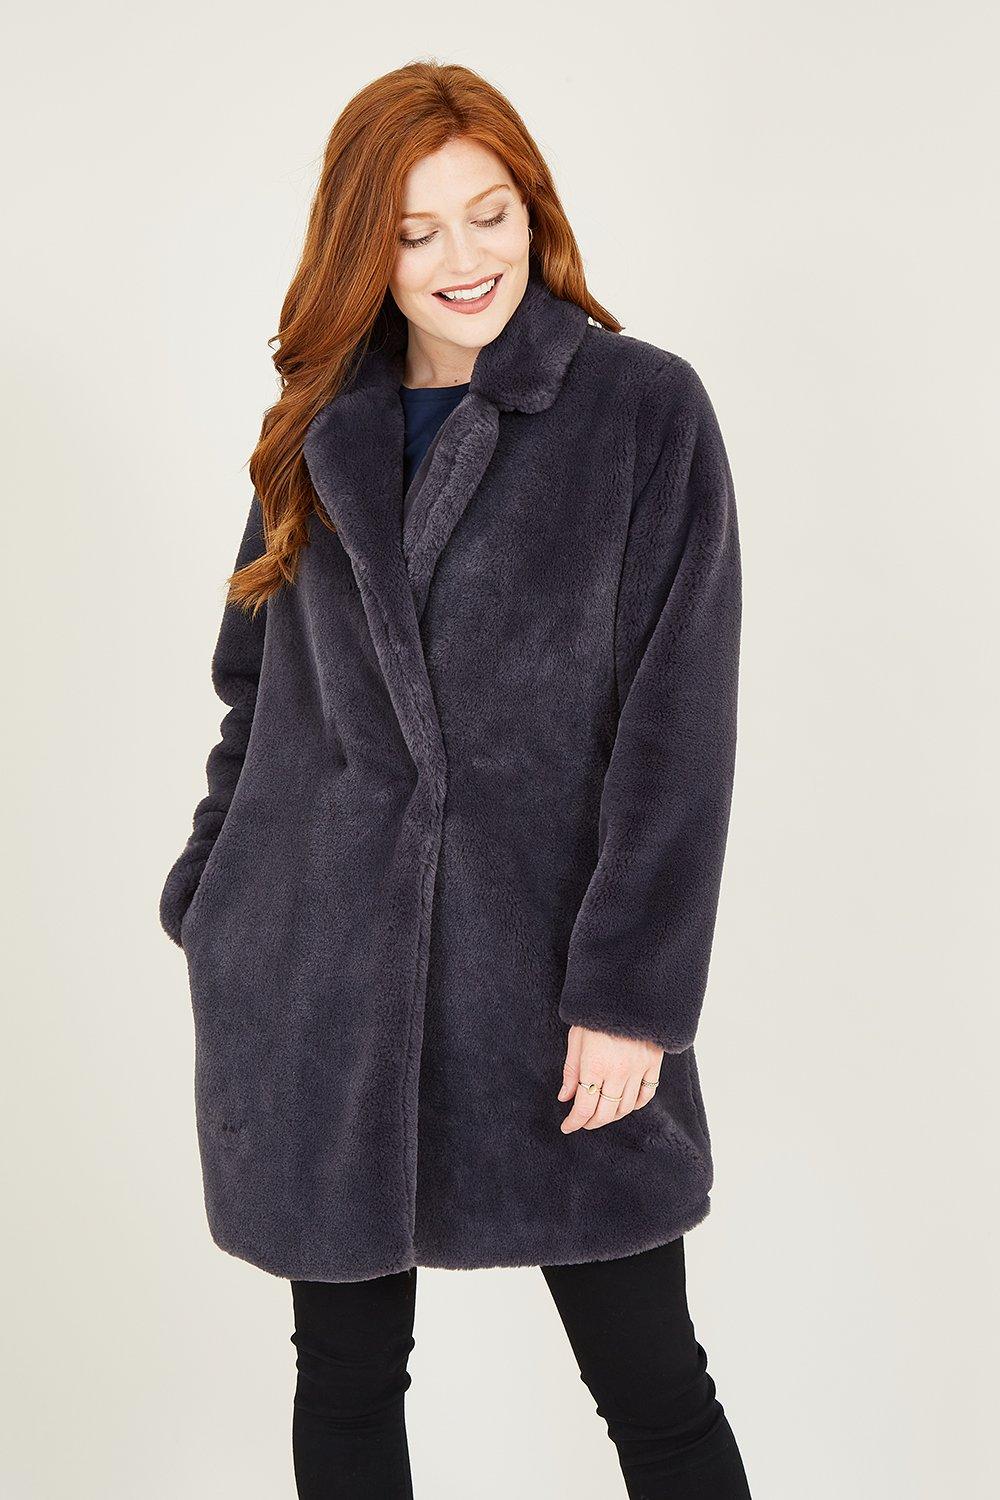 Jackets & Coats | Grey Faux Fur Coat | Yumi